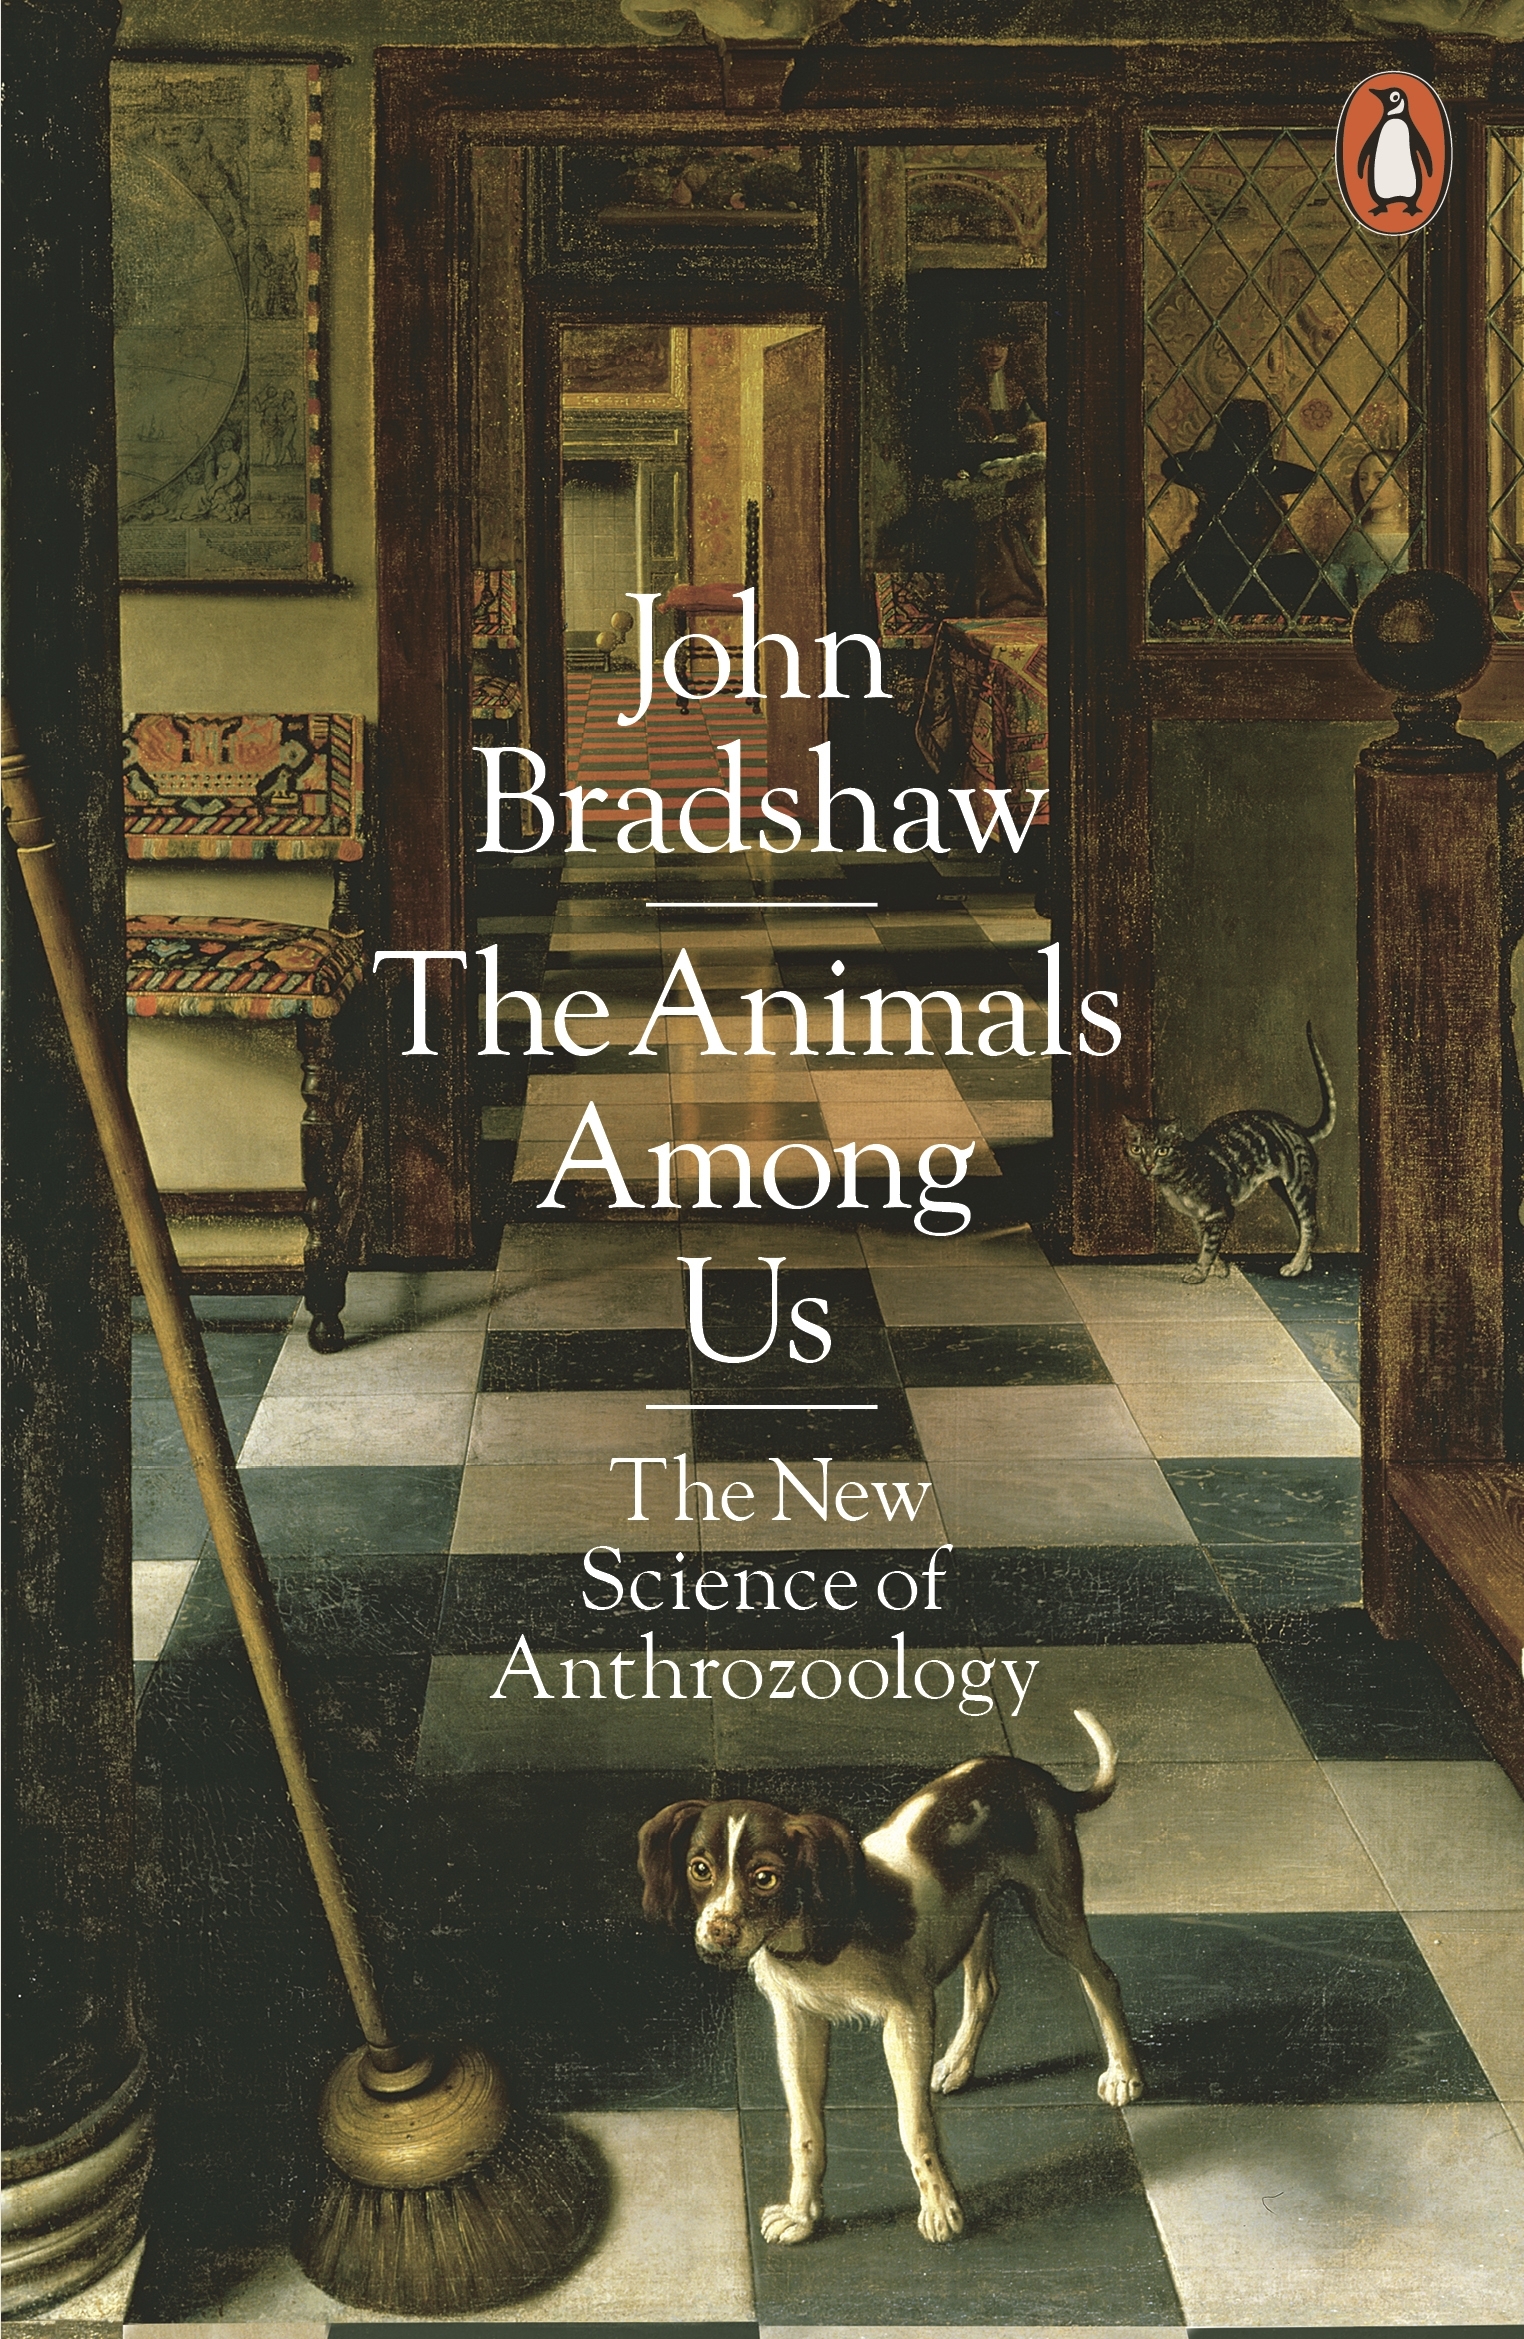 The Animals Among Us by John Bradshaw - Penguin Books Australia